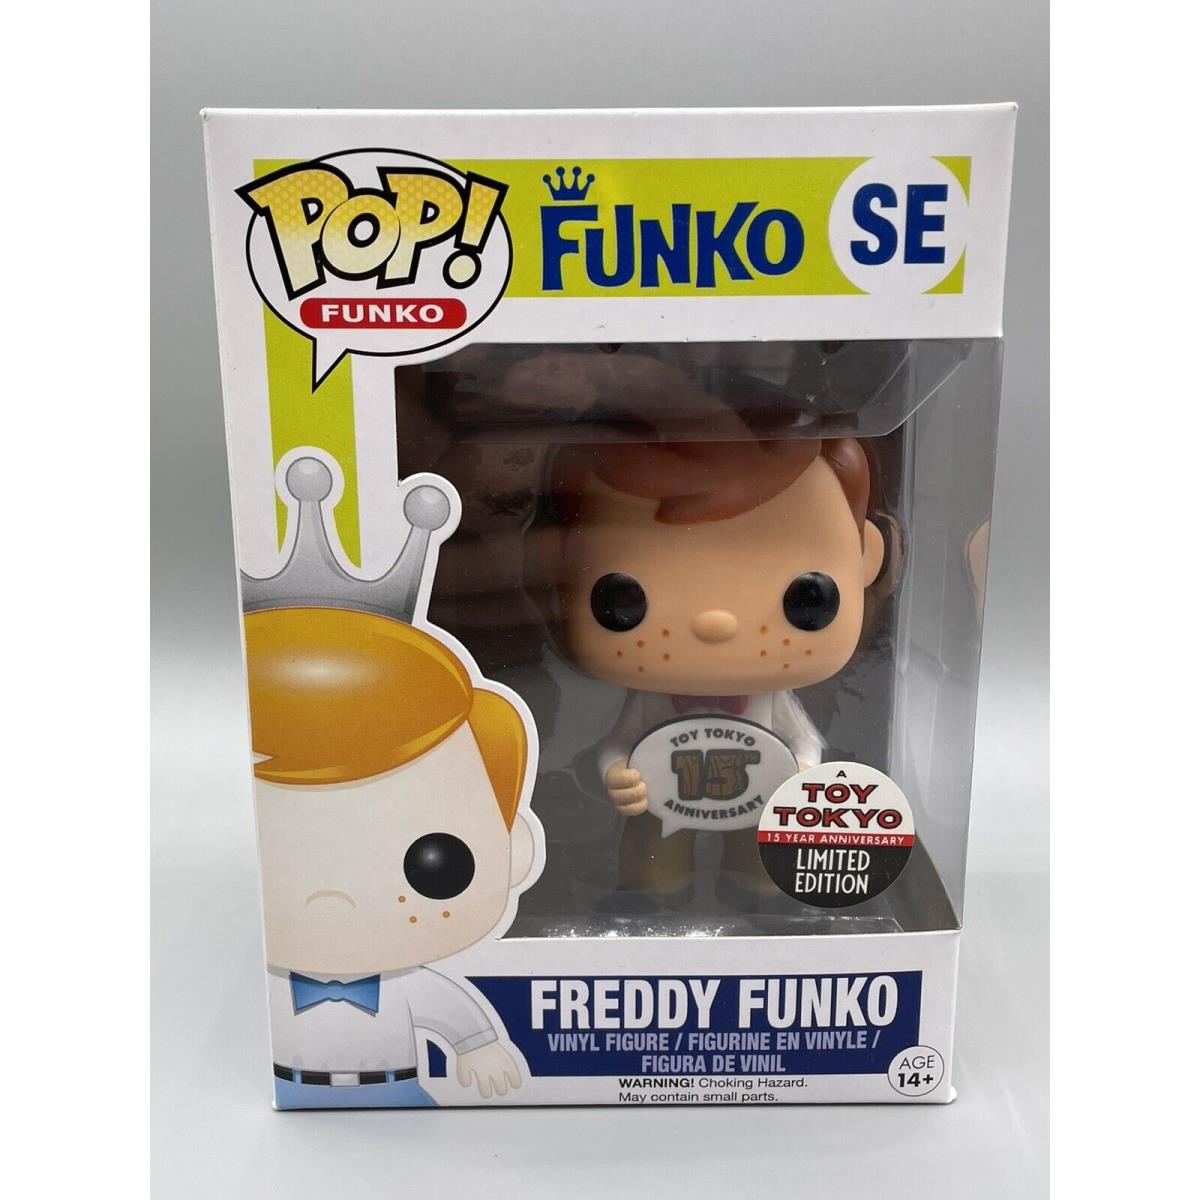 Nycc 2015 Funko Pop Freddy Funko SE 15th Year Toy Tokyo Exclusive - Good Box